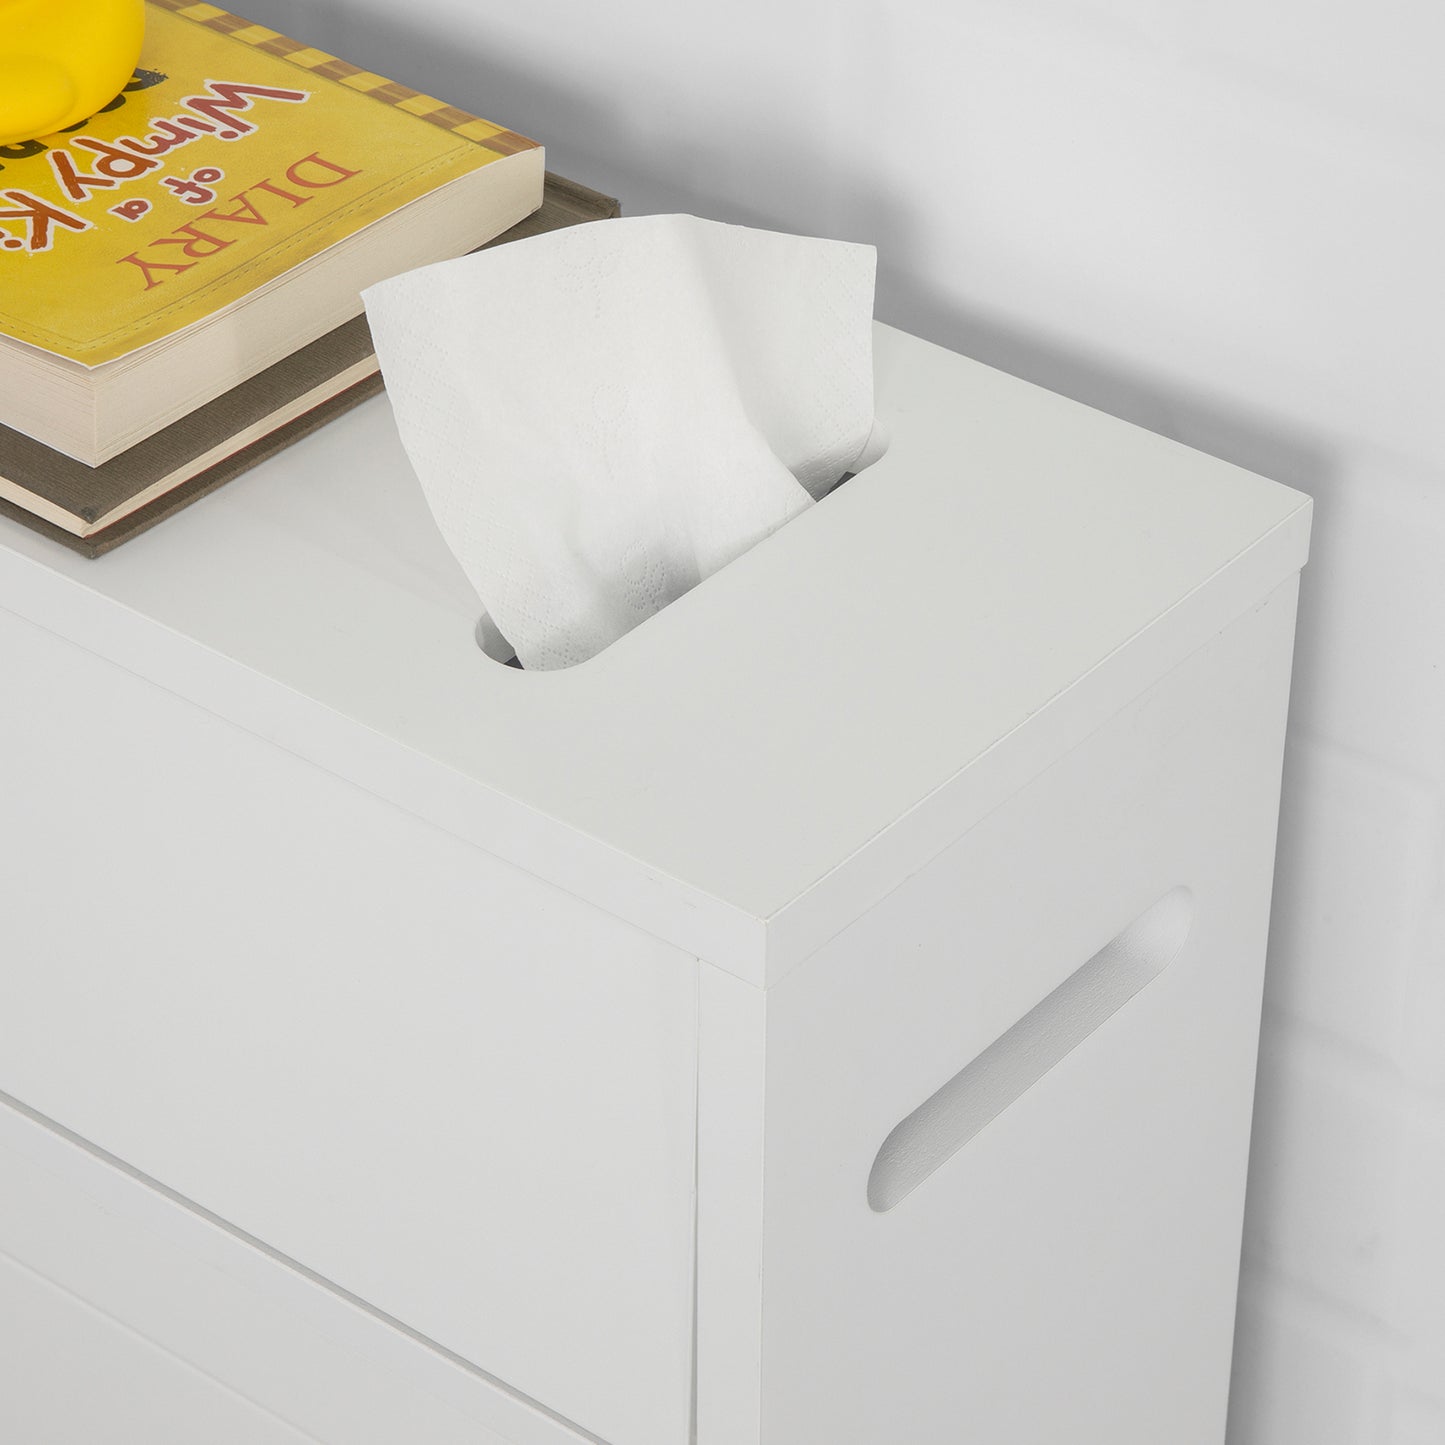 SoBuy White Toilet Paper Roll Holder, Bathroom Cabinet Storage Shelf on Wheels